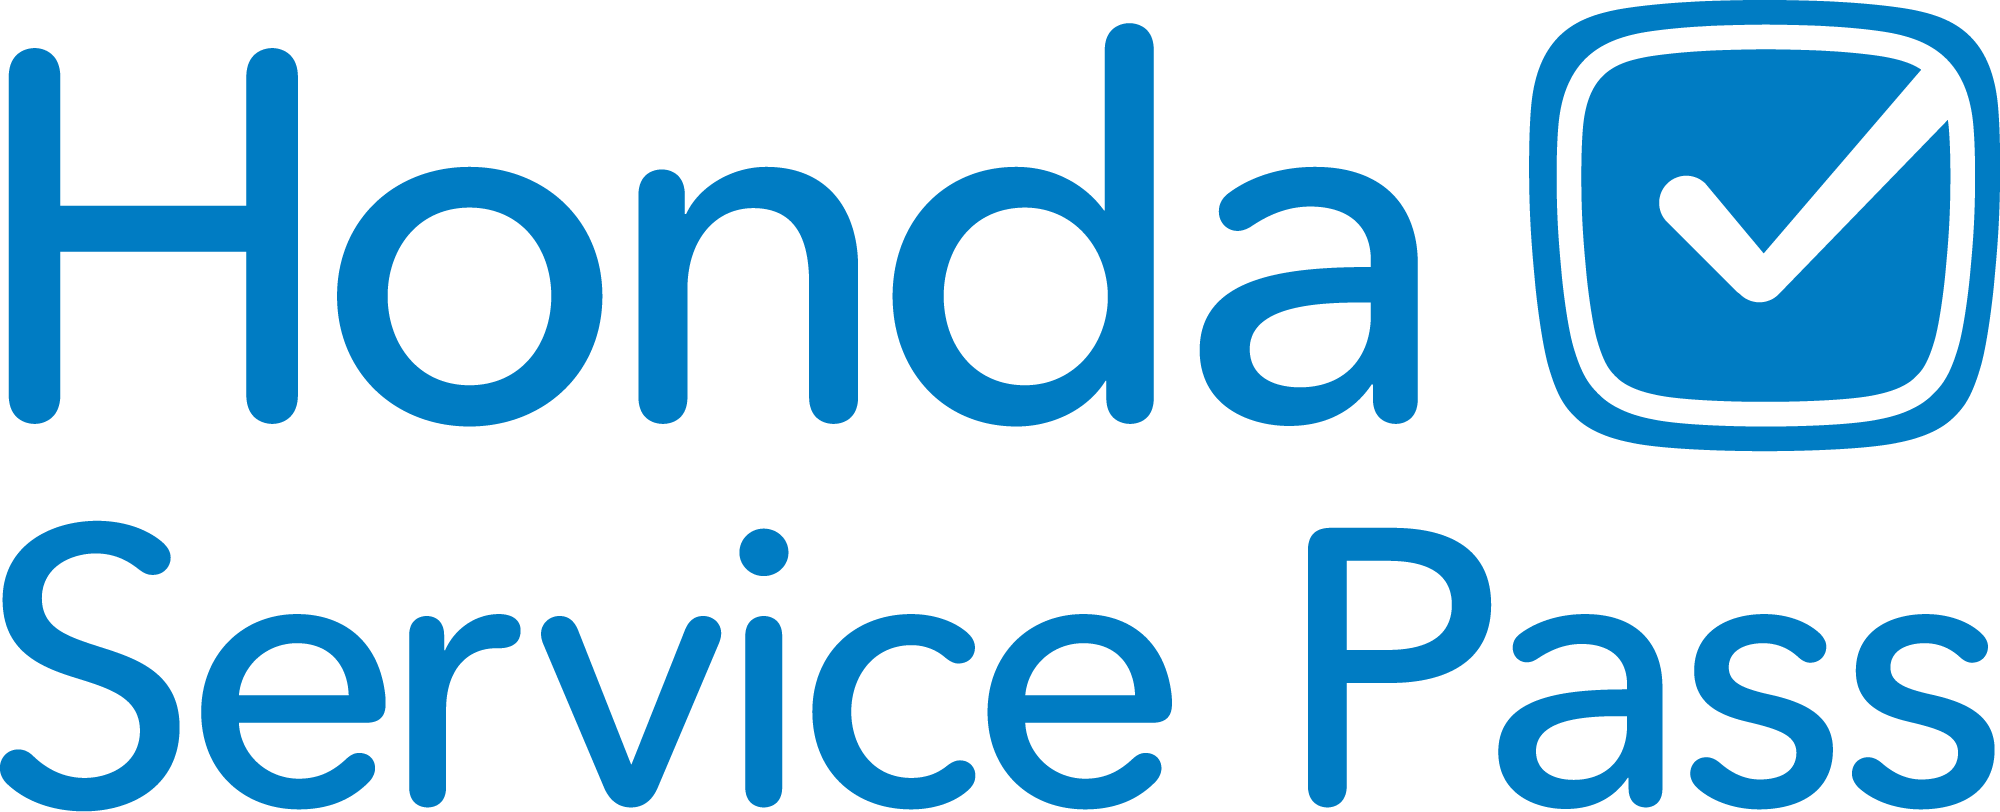 Honda Service Pass Logo